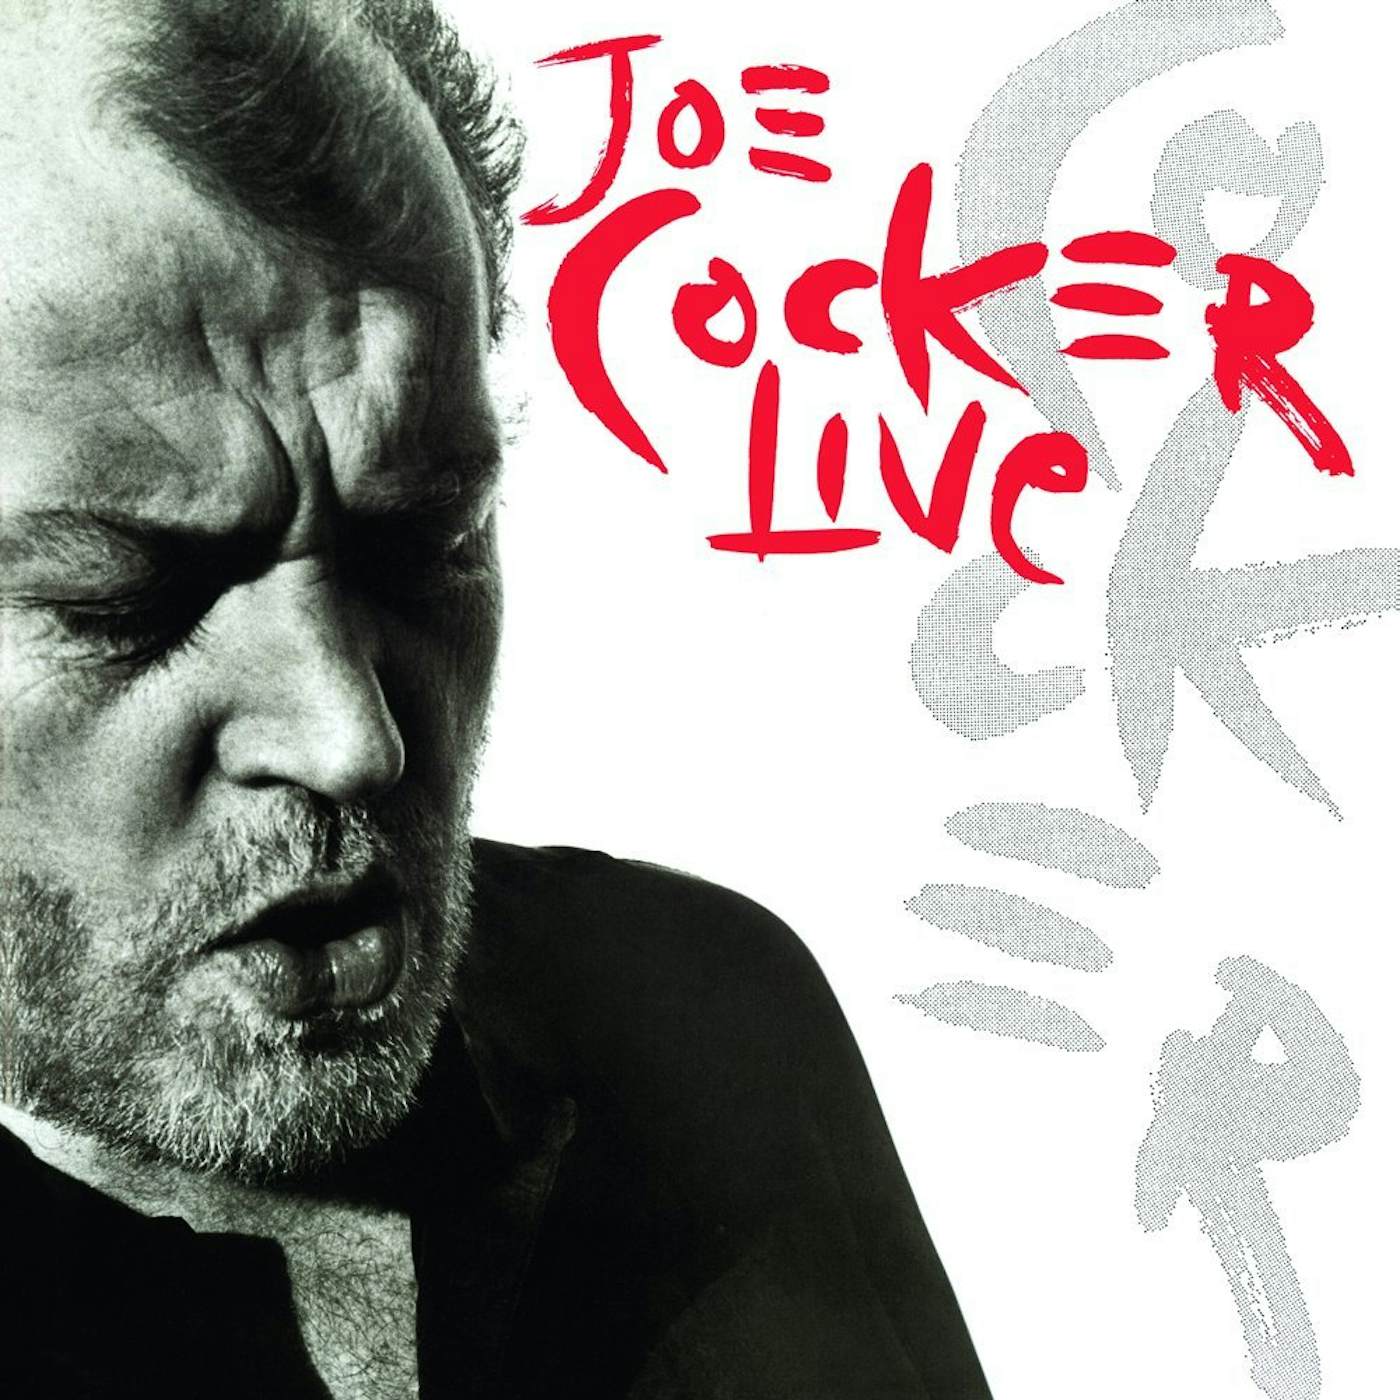 Joe Cocker Live Vinyl Record